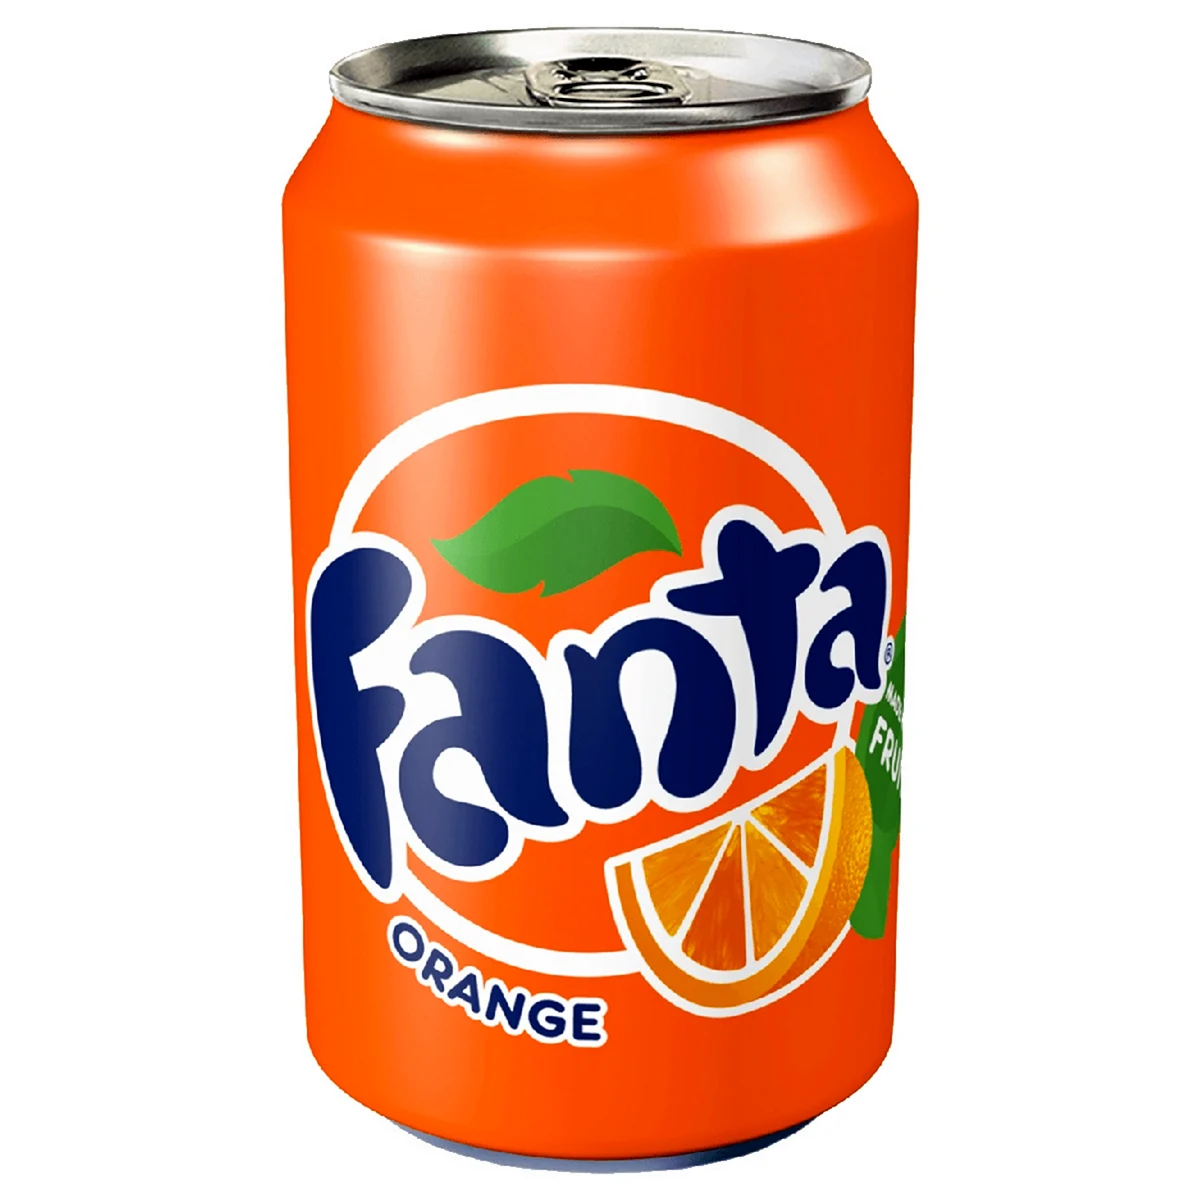 Fanta Orange can 330ml